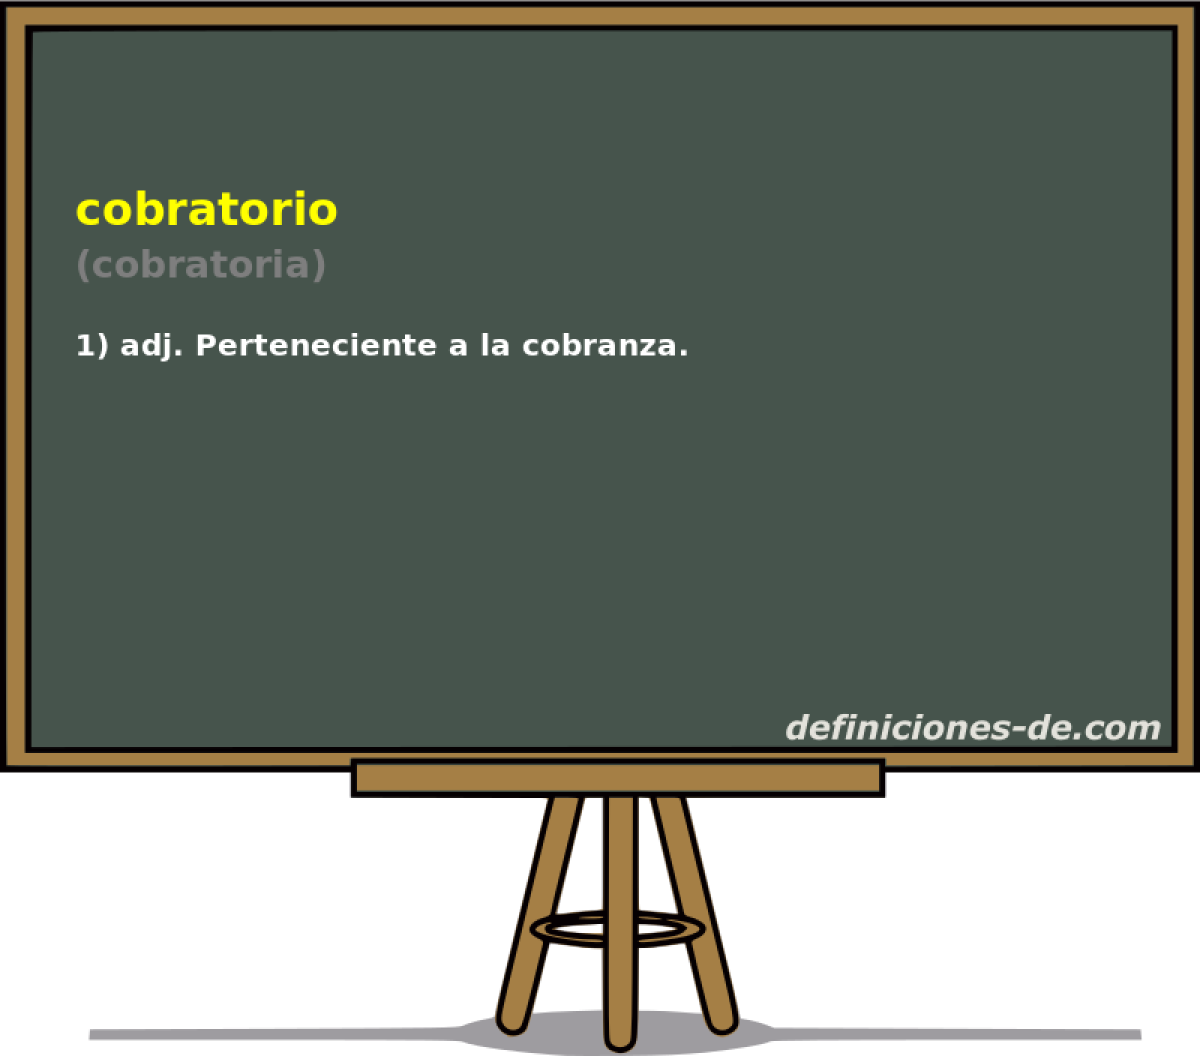 cobratorio (cobratoria)